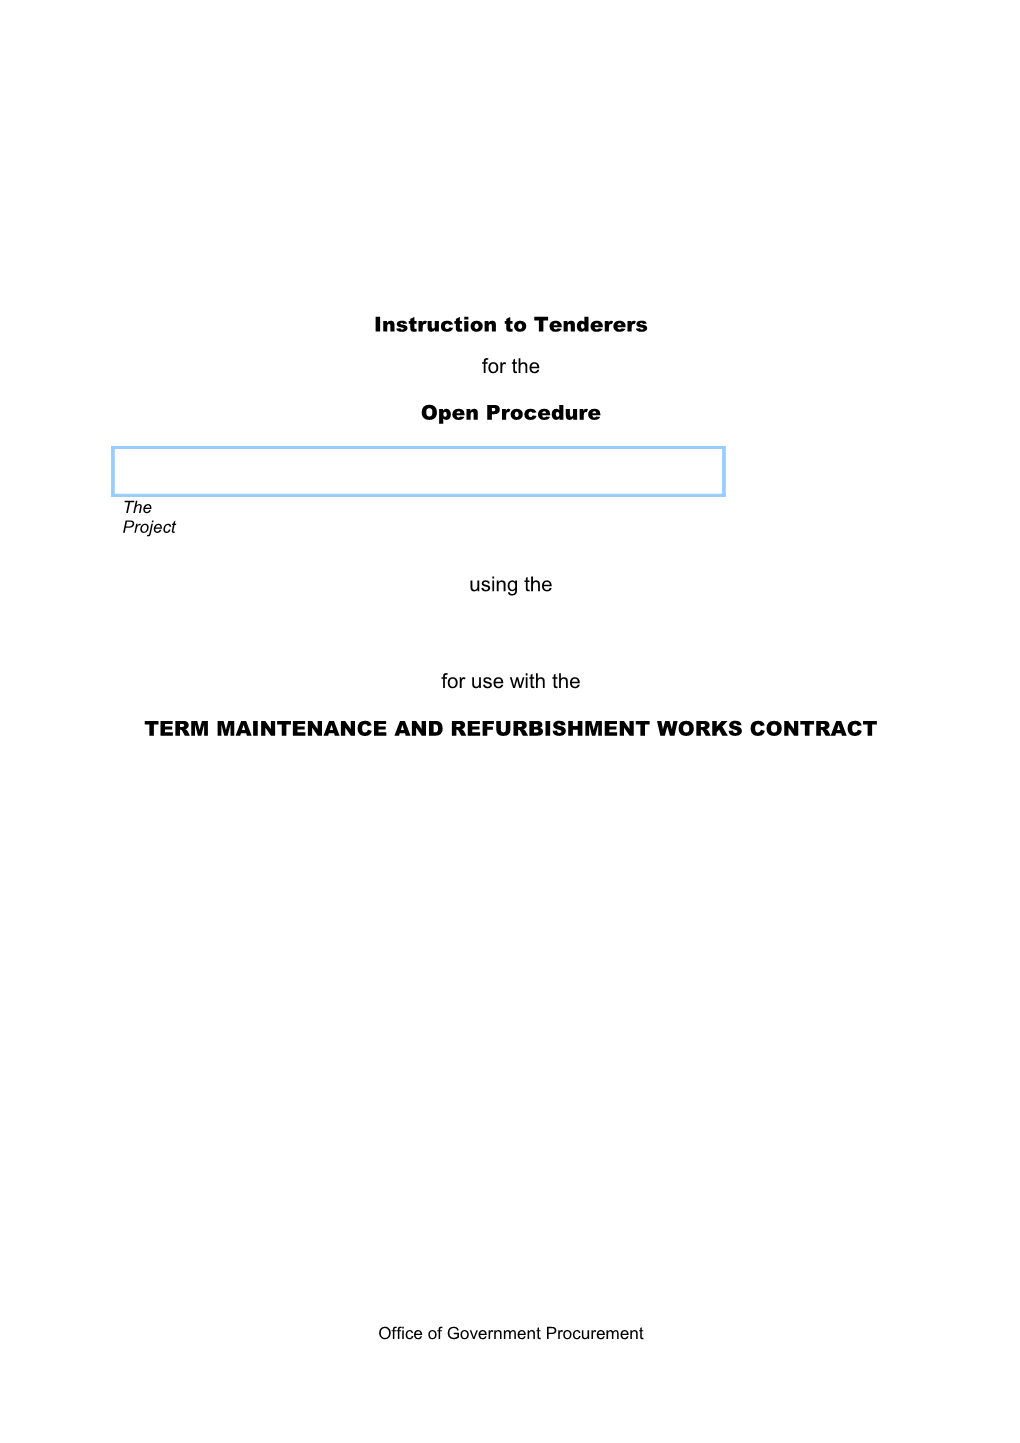 Instructions to Tenderers Open Procedure Term Maintenance and Refurbishment Contract